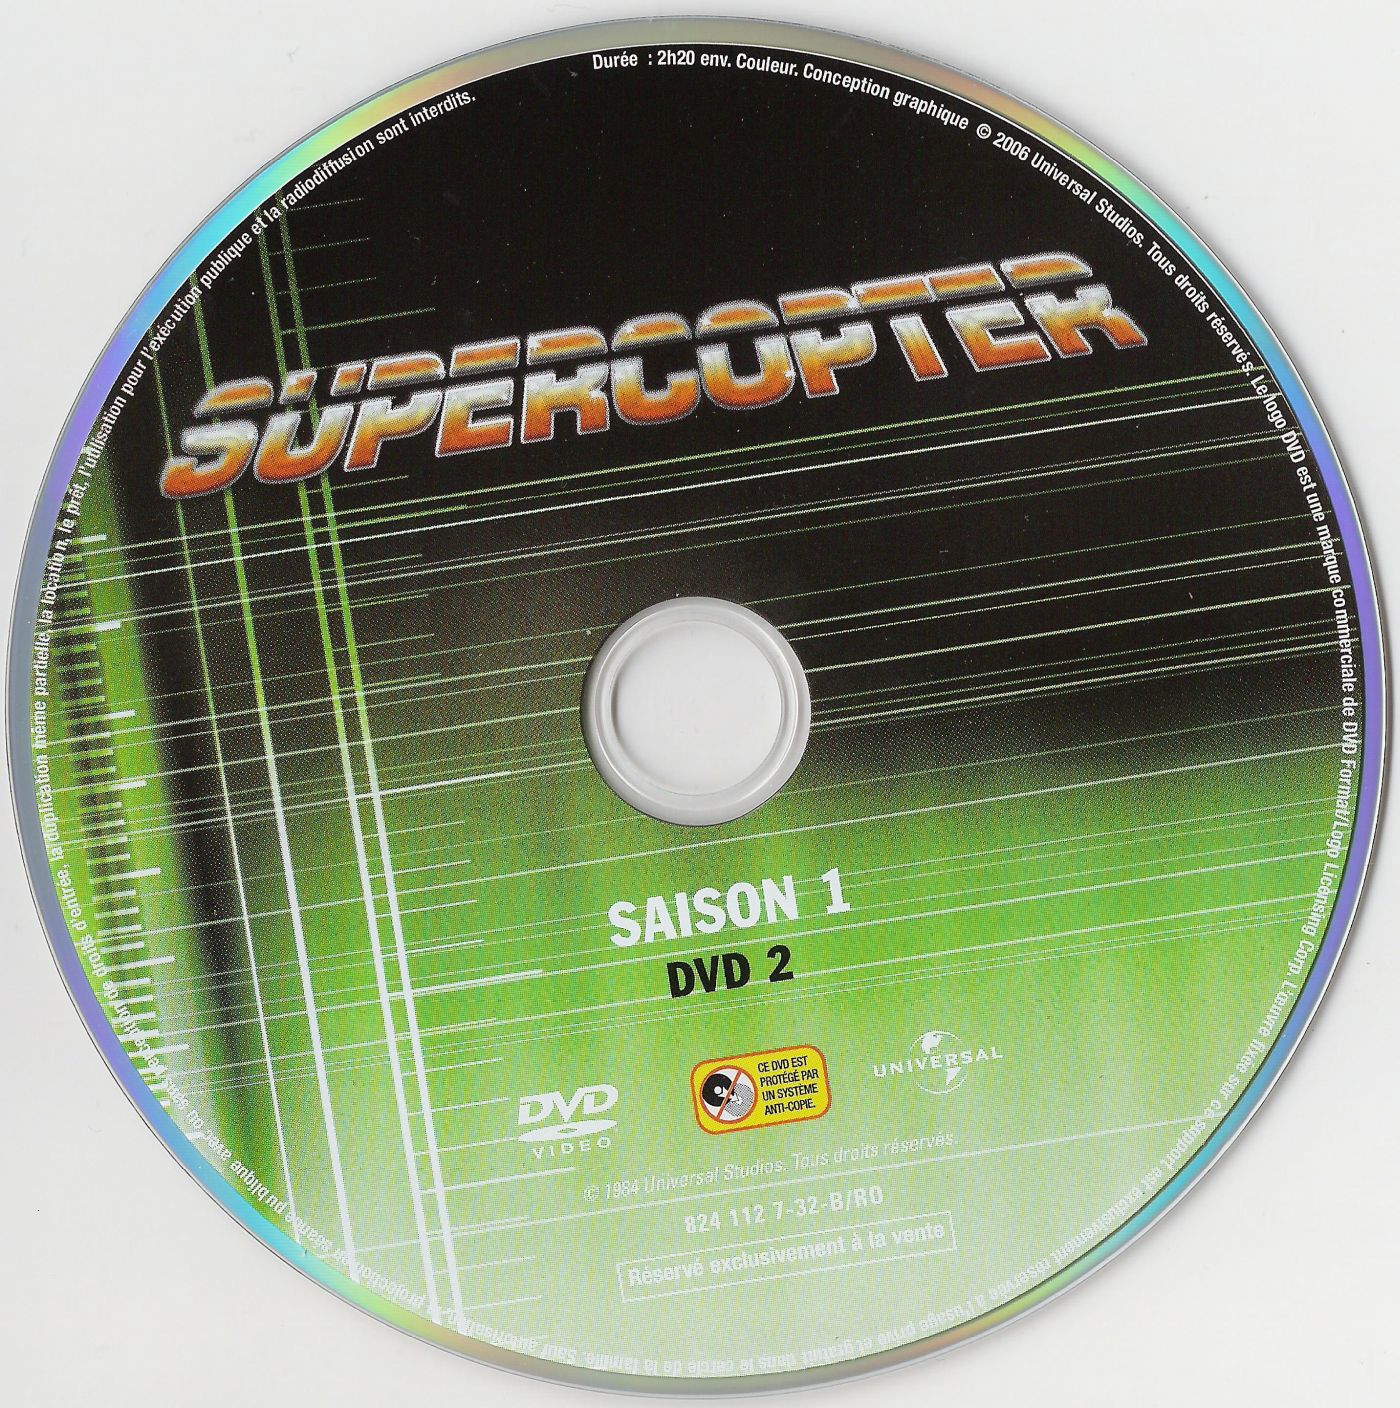 Supercopter saison 1 dvd 2